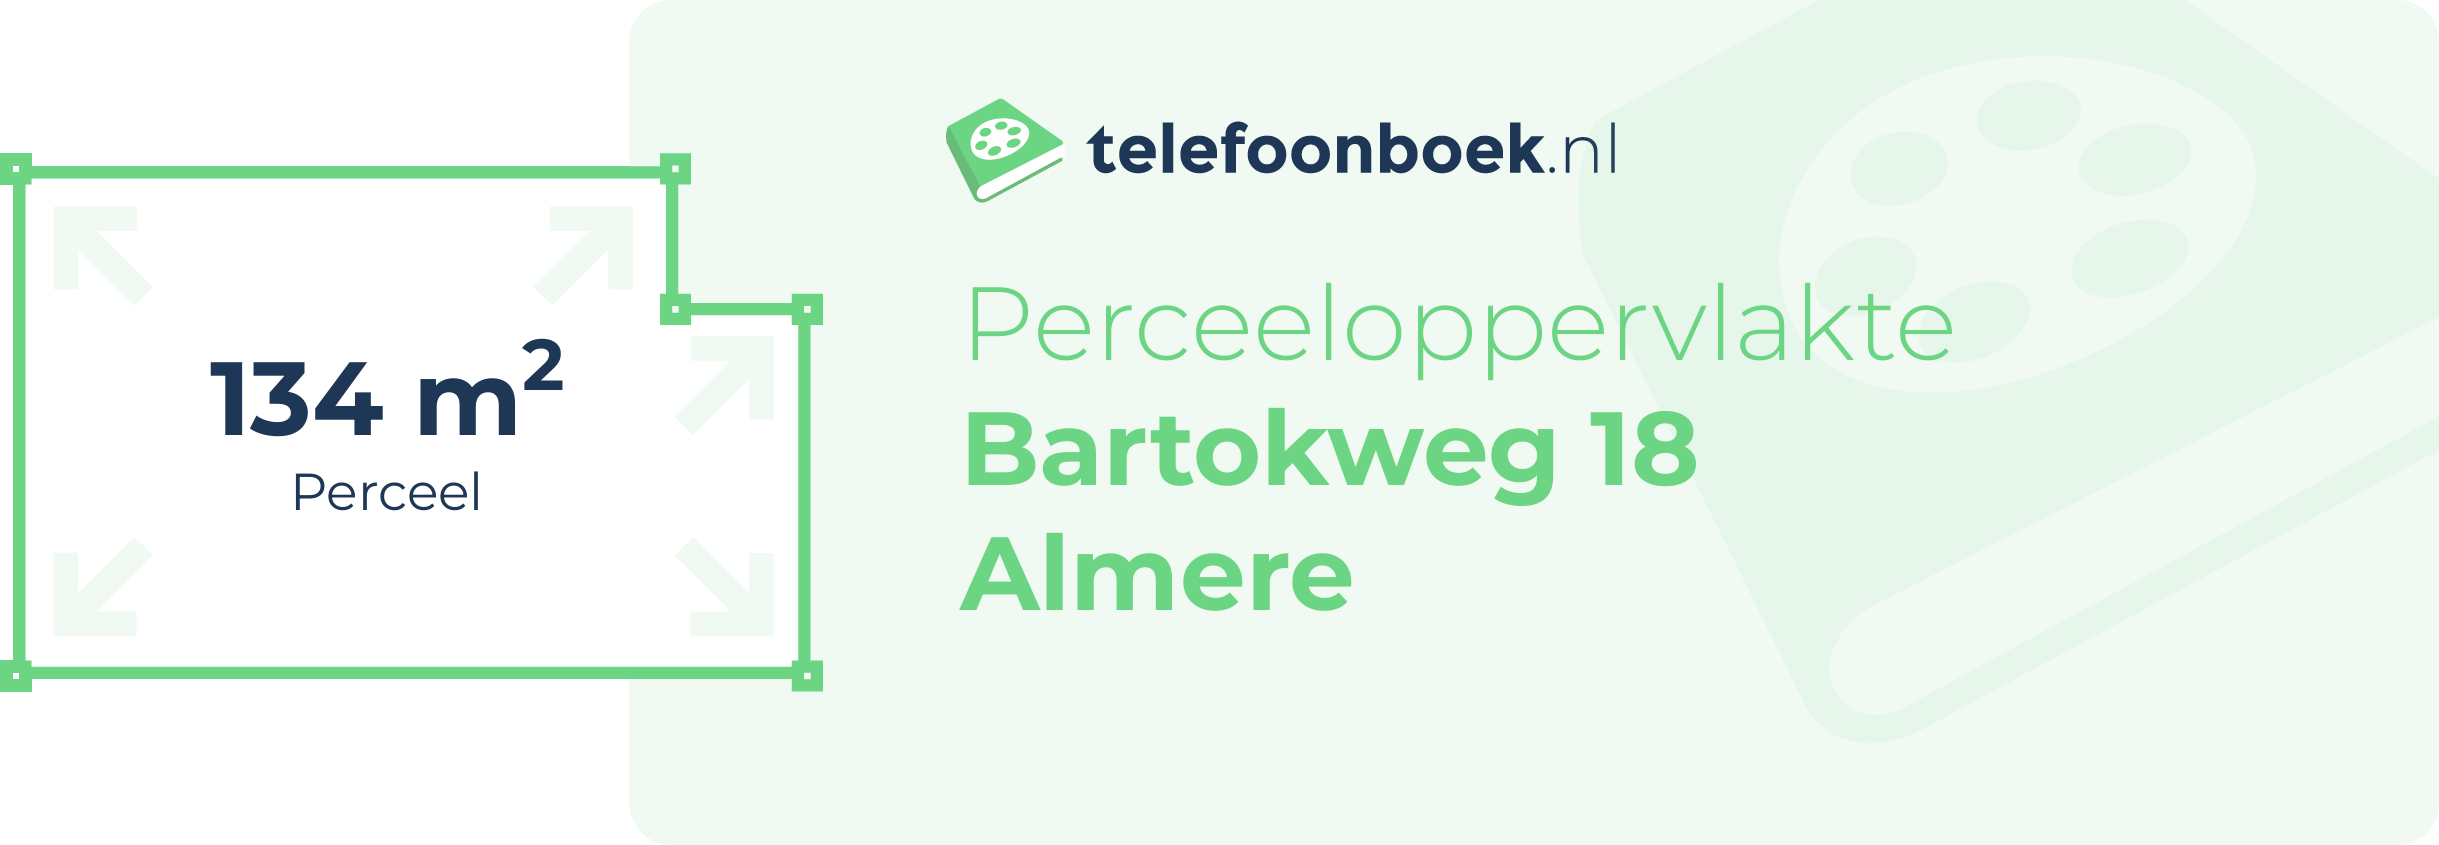 Perceeloppervlakte Bartokweg 18 Almere